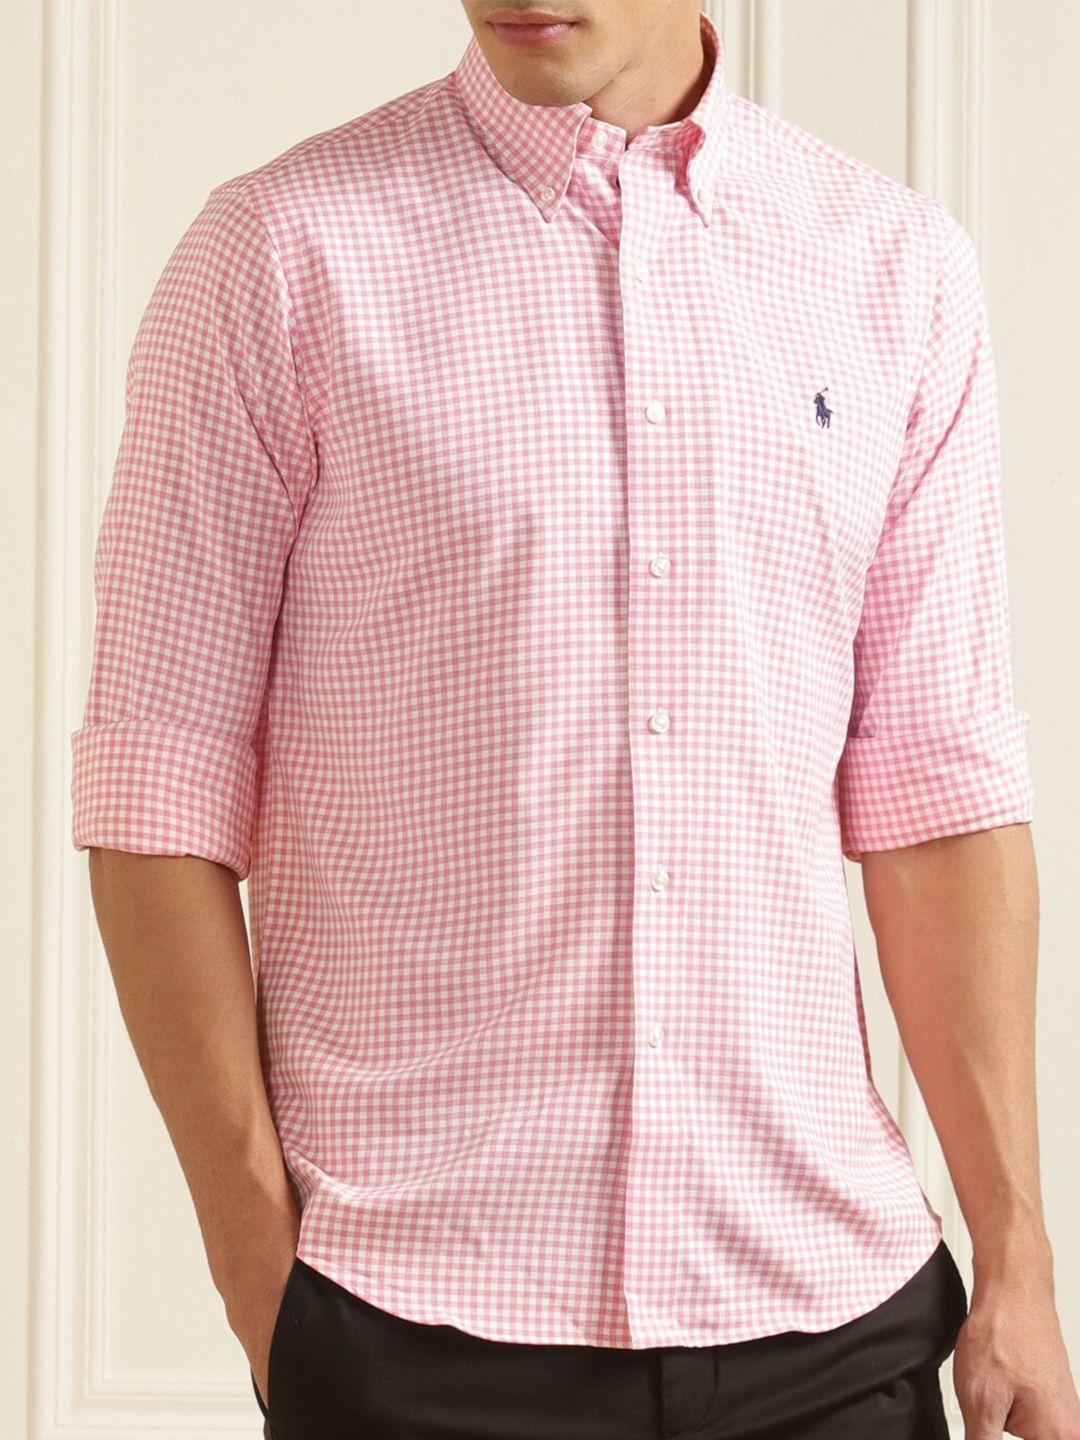 polo-ralph-lauren-men-pink-gingham-checked-pure-cotton-formal-shirt